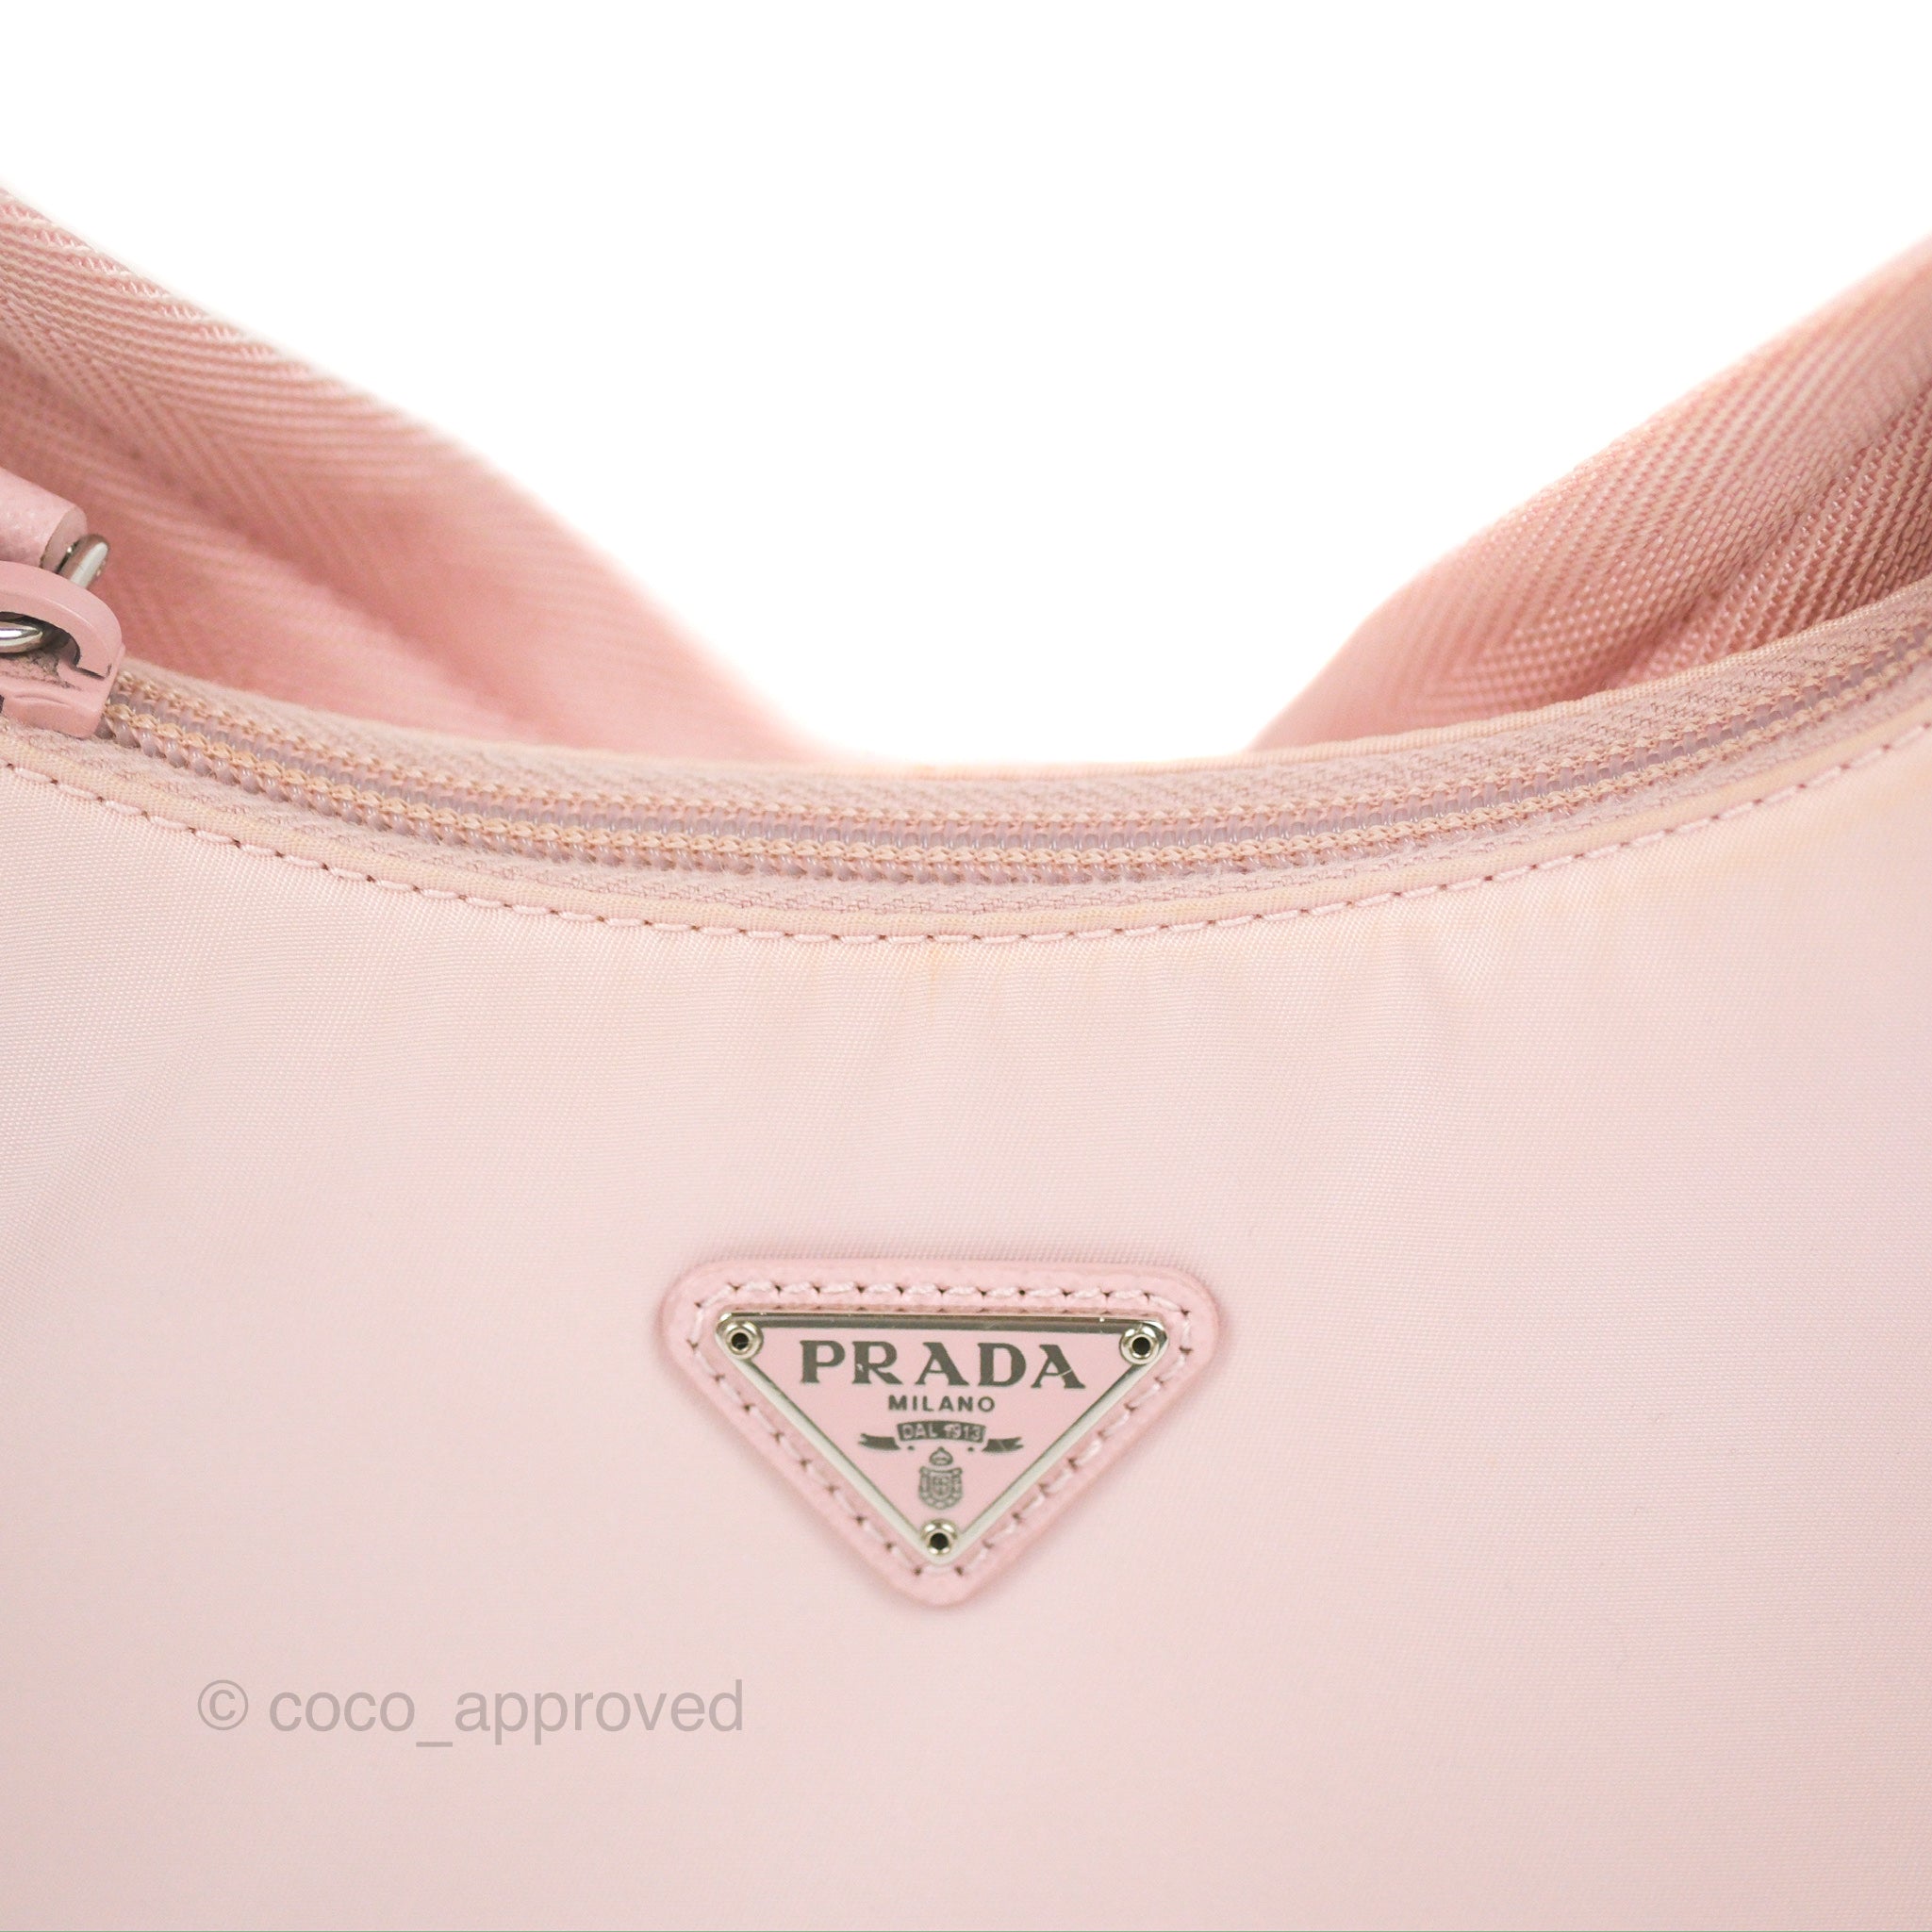 Prada Re-Edition 2005 Nylon Bag Pink 